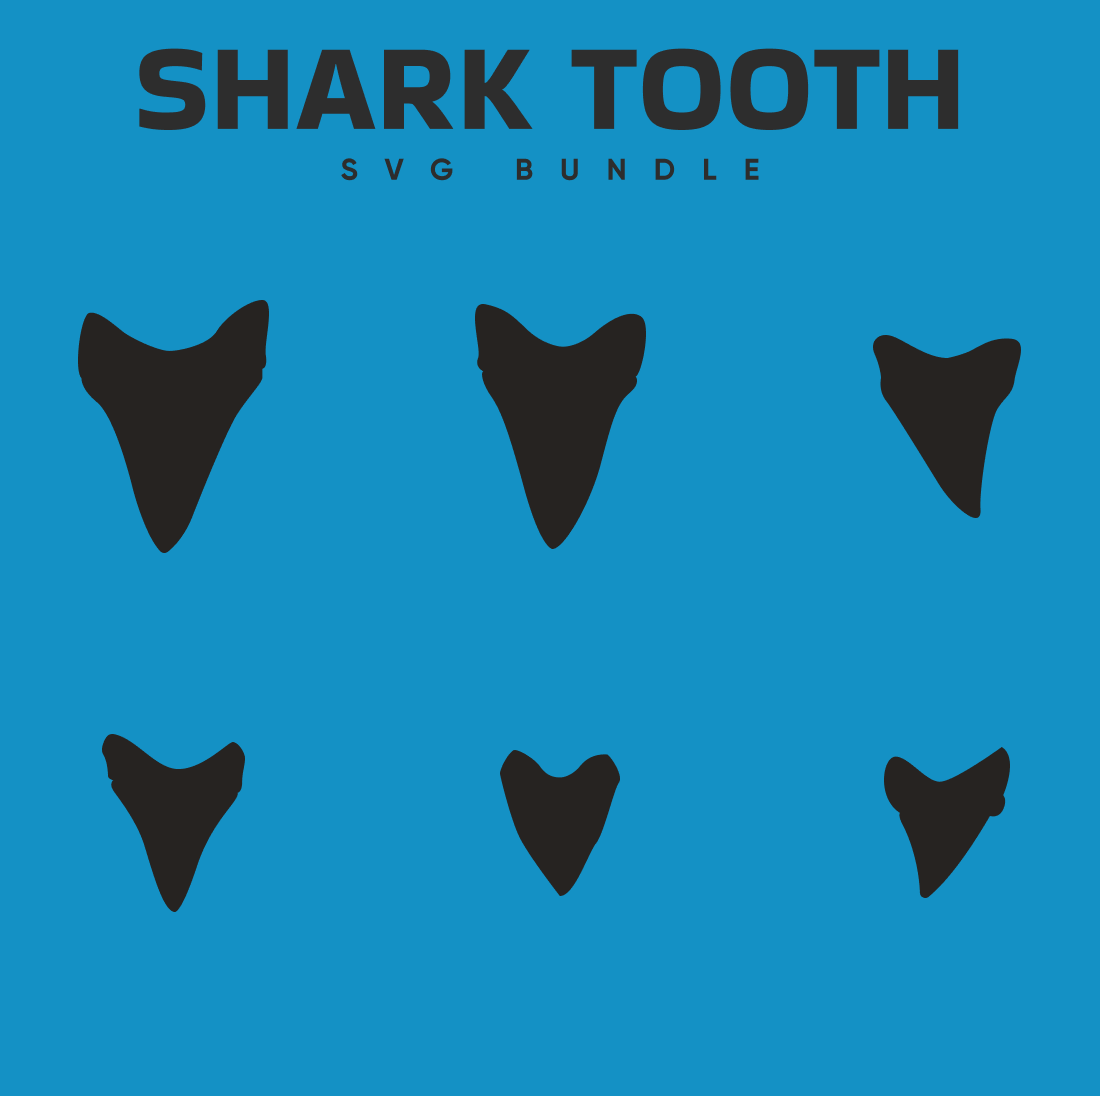 Shark tooth svg bundle.